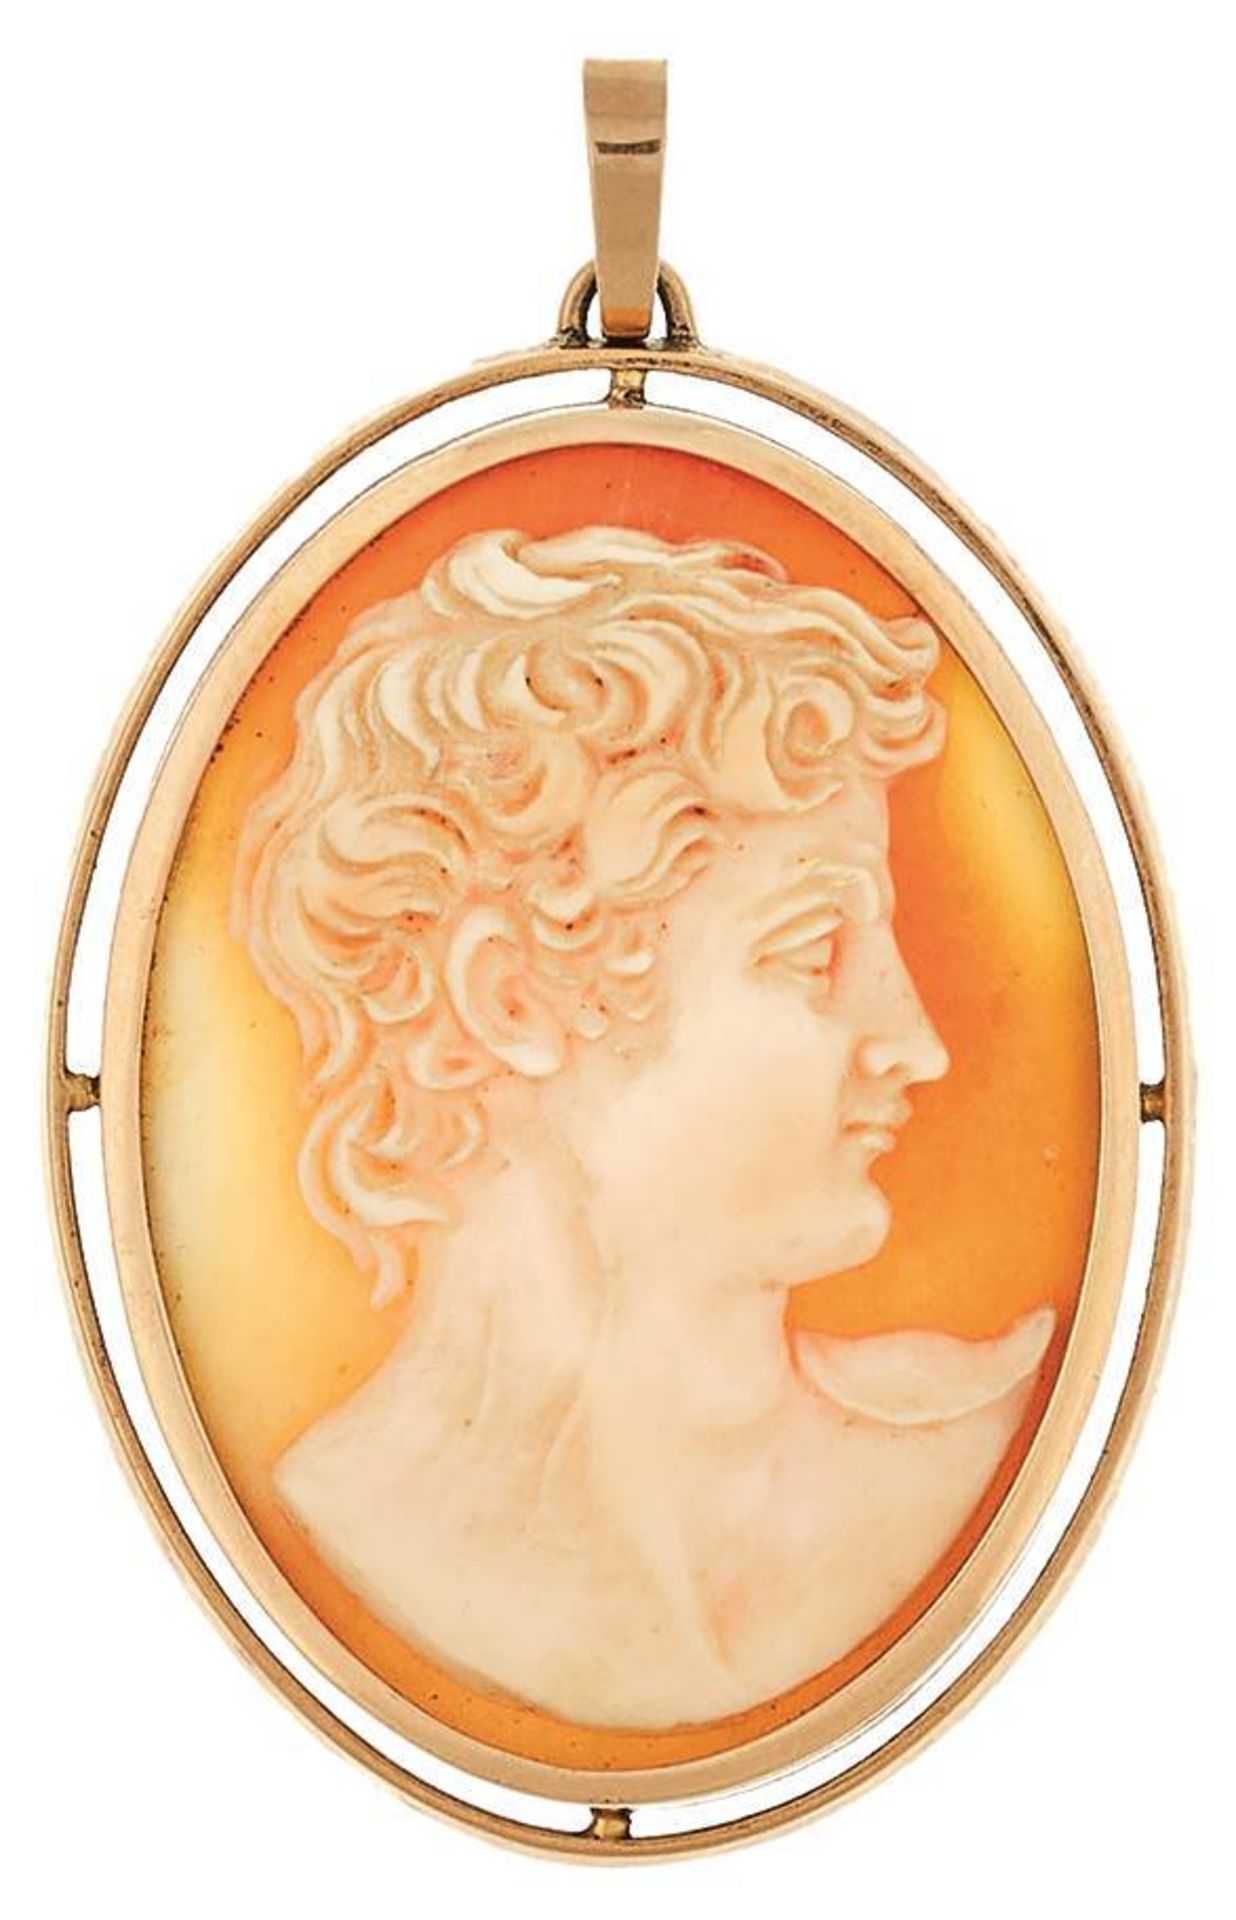 Ovale handgravierte Muschelkamee, klass. Herrenbildniss, 585 Rosegold, ca. 5,3x 3,4 cm, 13,35g. - Bild 2 aus 2